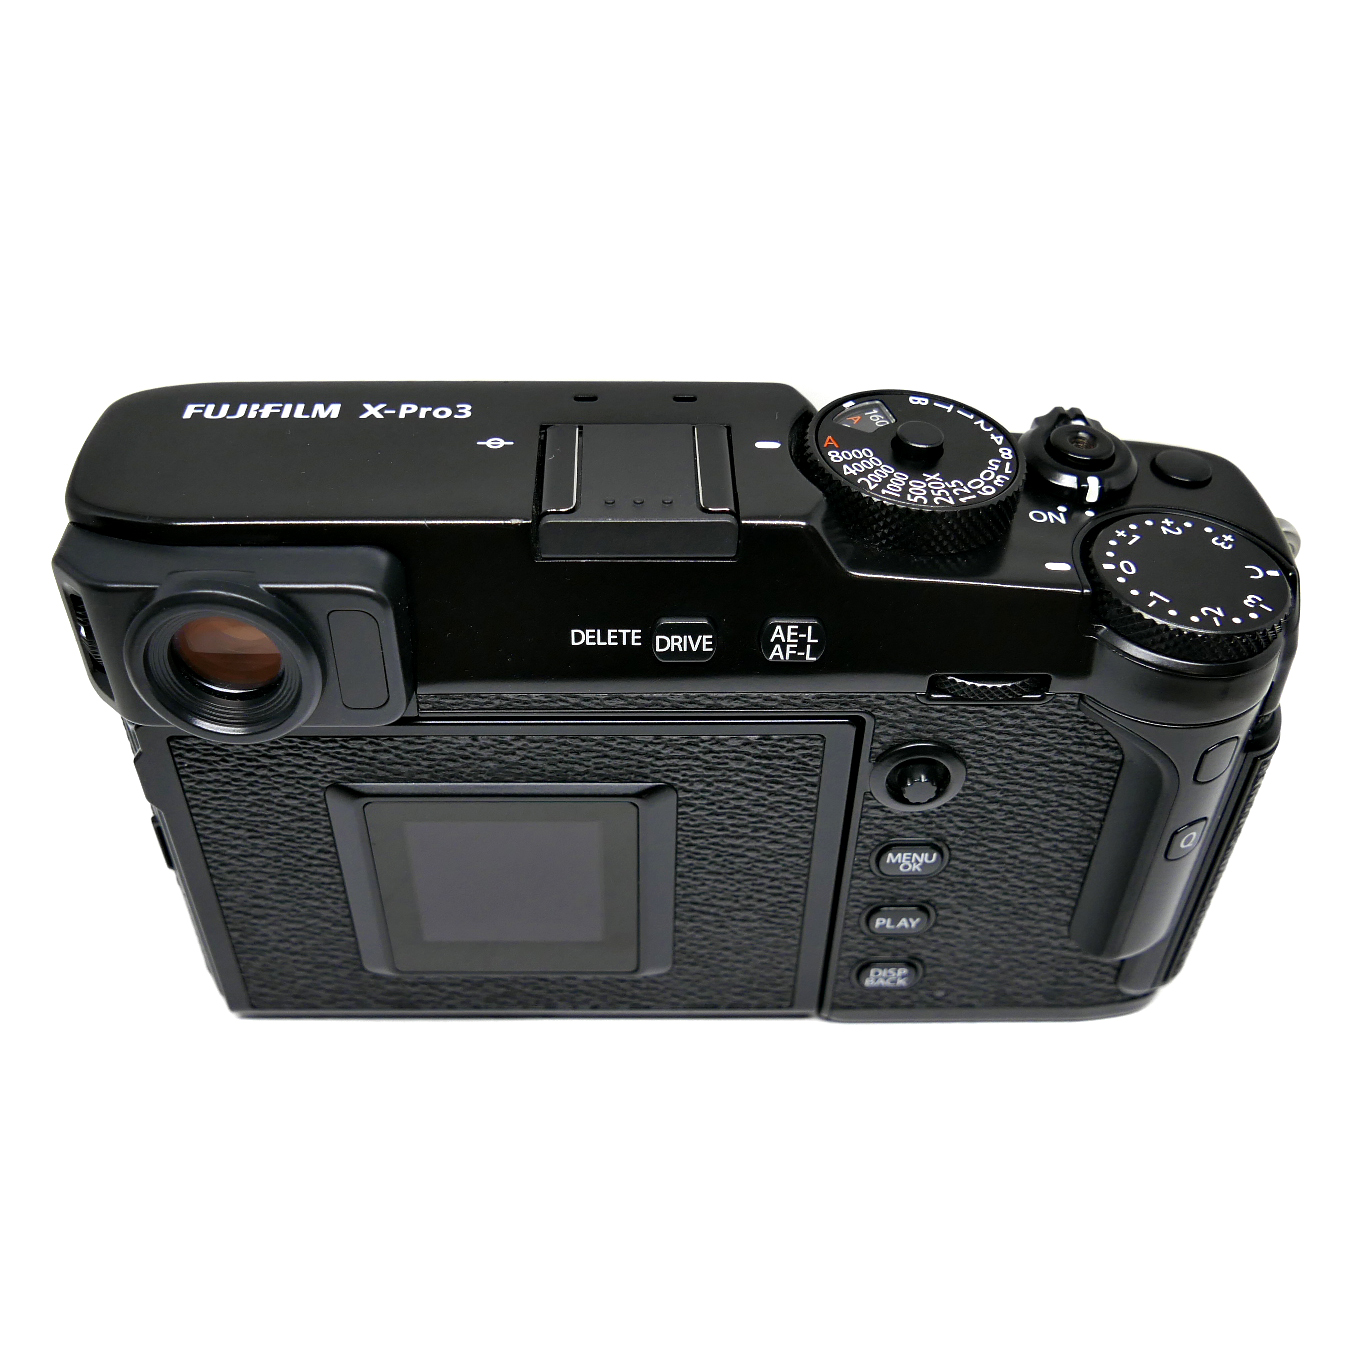 (Myyty) Fujifilm X-Pro 3 runko (SC:8650) (käytetty)